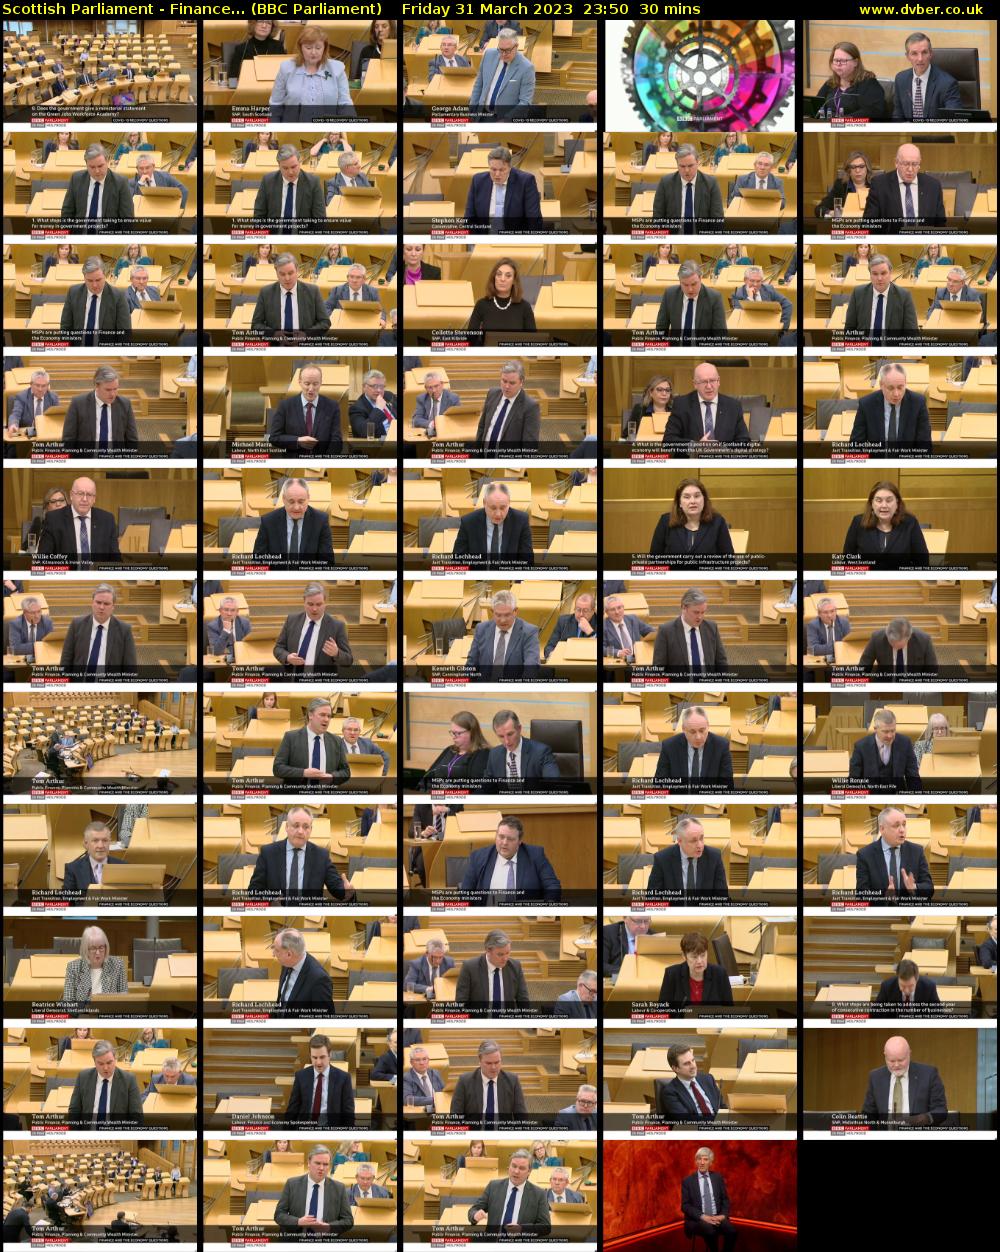 Scottish Parliament - Finance... (BBC Parliament) Friday 31 March 2023 23:50 - 00:20